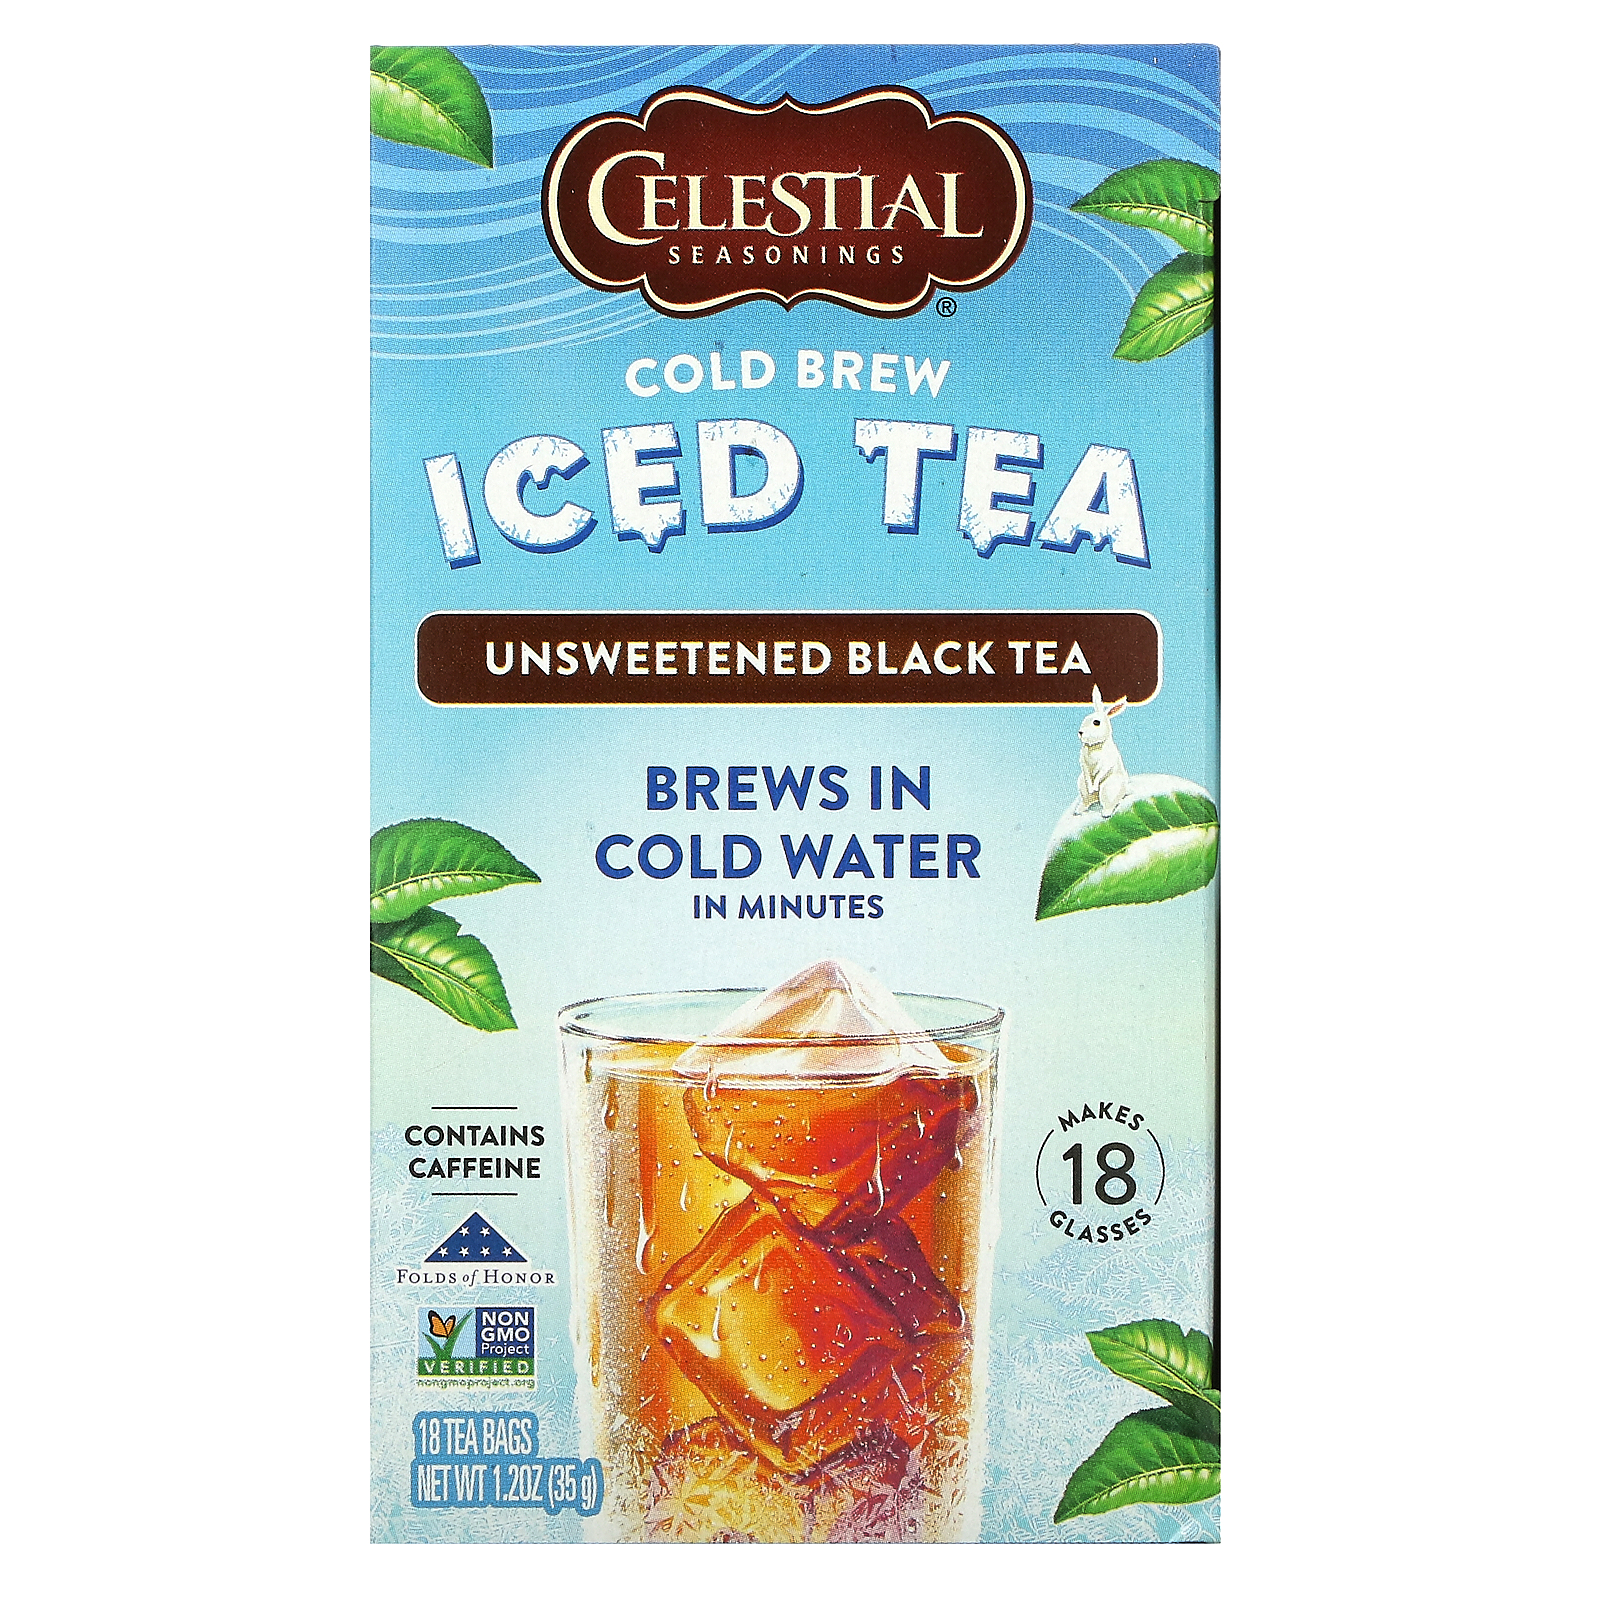 Celestial Seasonings, Cold Brew Iced Tea, Unsweetened Black Tea, 18 Tea Bags, 1.2 oz (35 g)